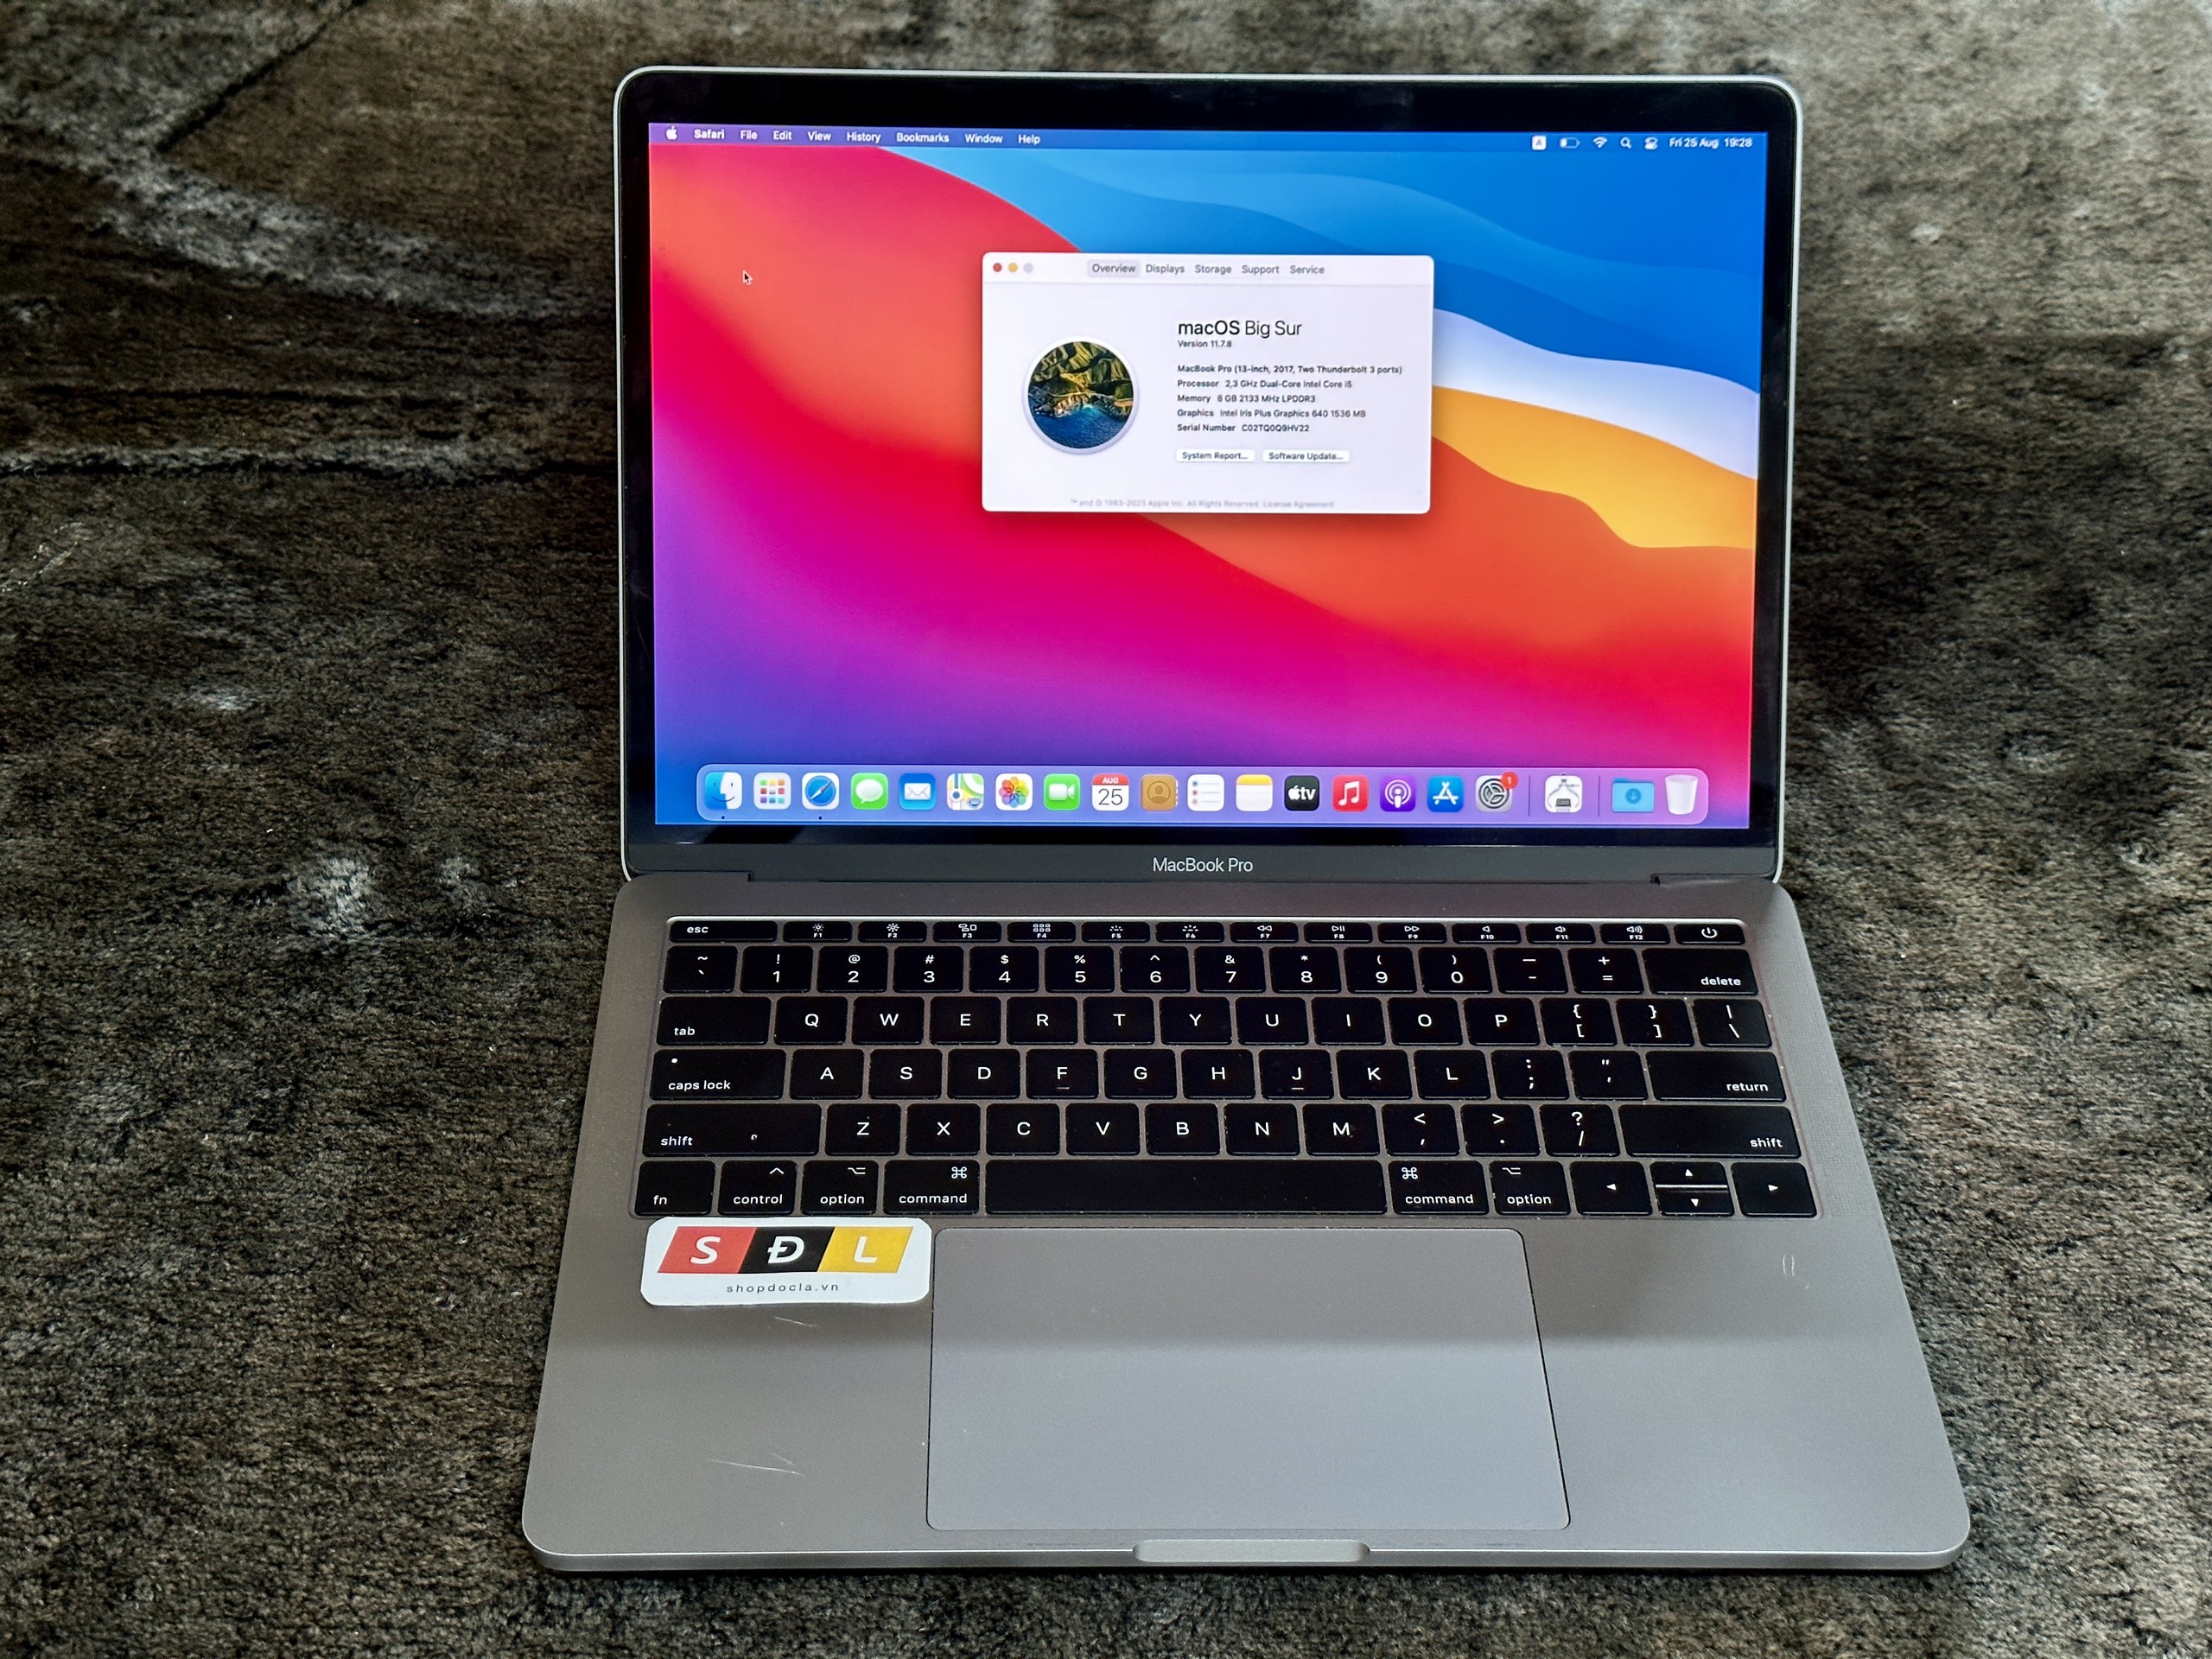 MacBook Pro (13-inch, 2017, Two Thunderbolt 3 ports) i5 8GB 128GB MPXQ2